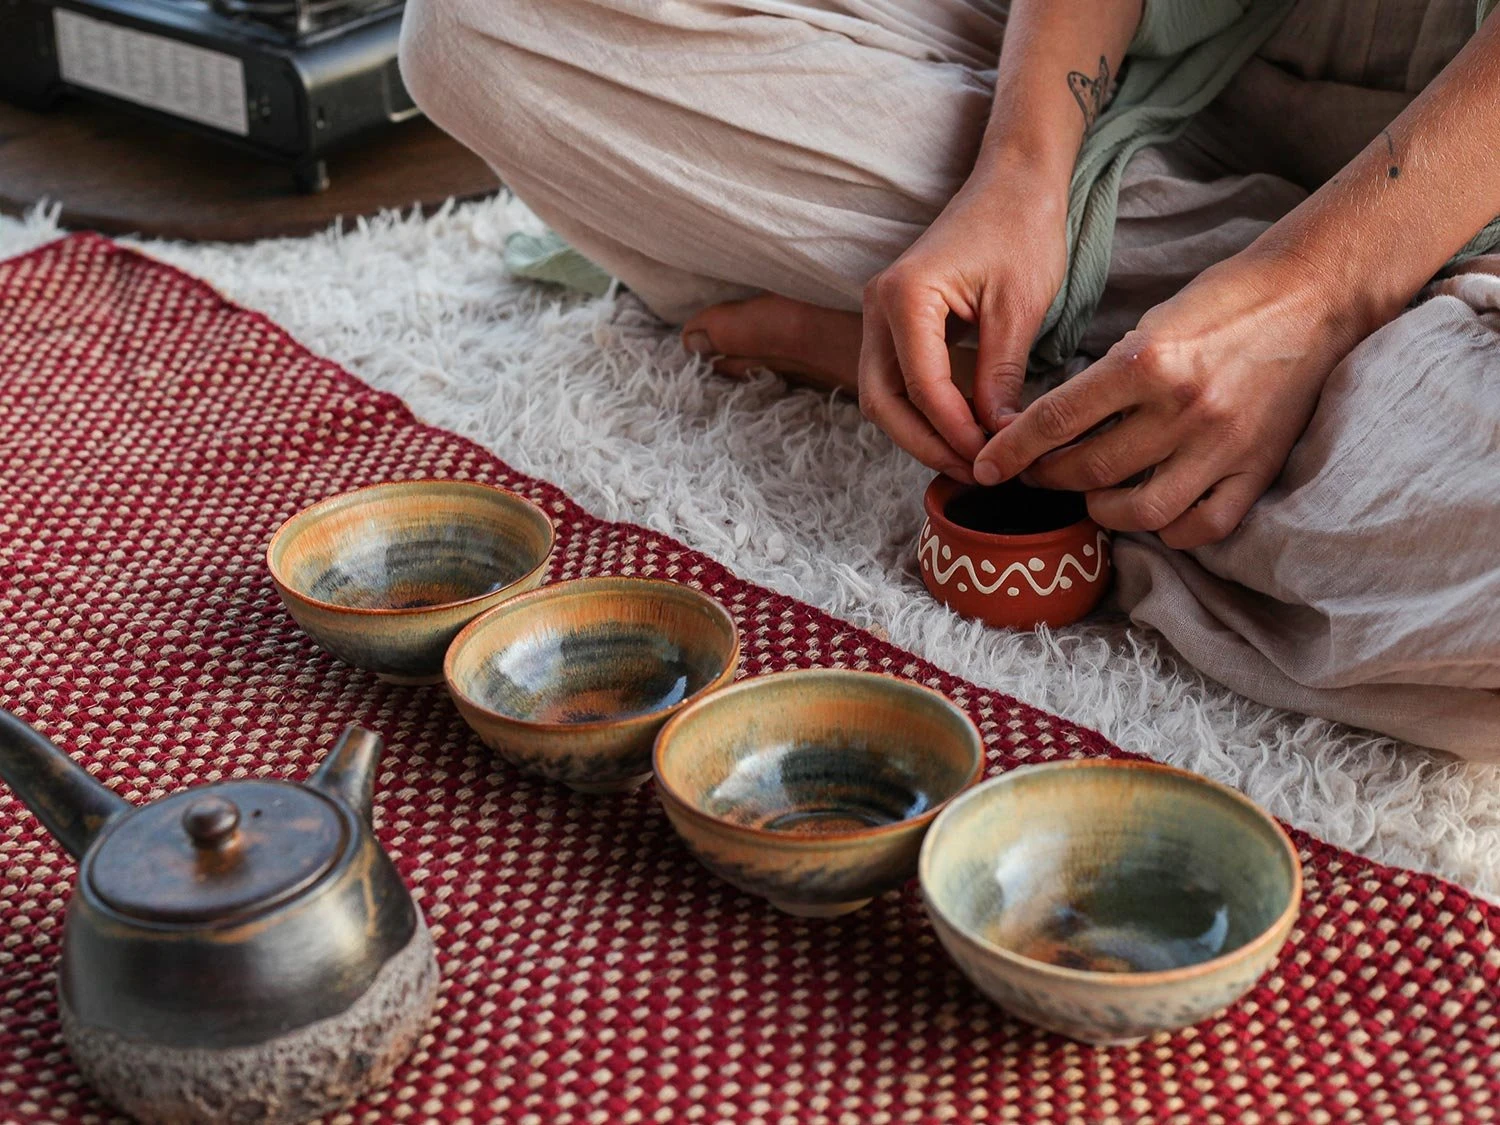 maidla resort tea ceremony in nature villas tea ceremony